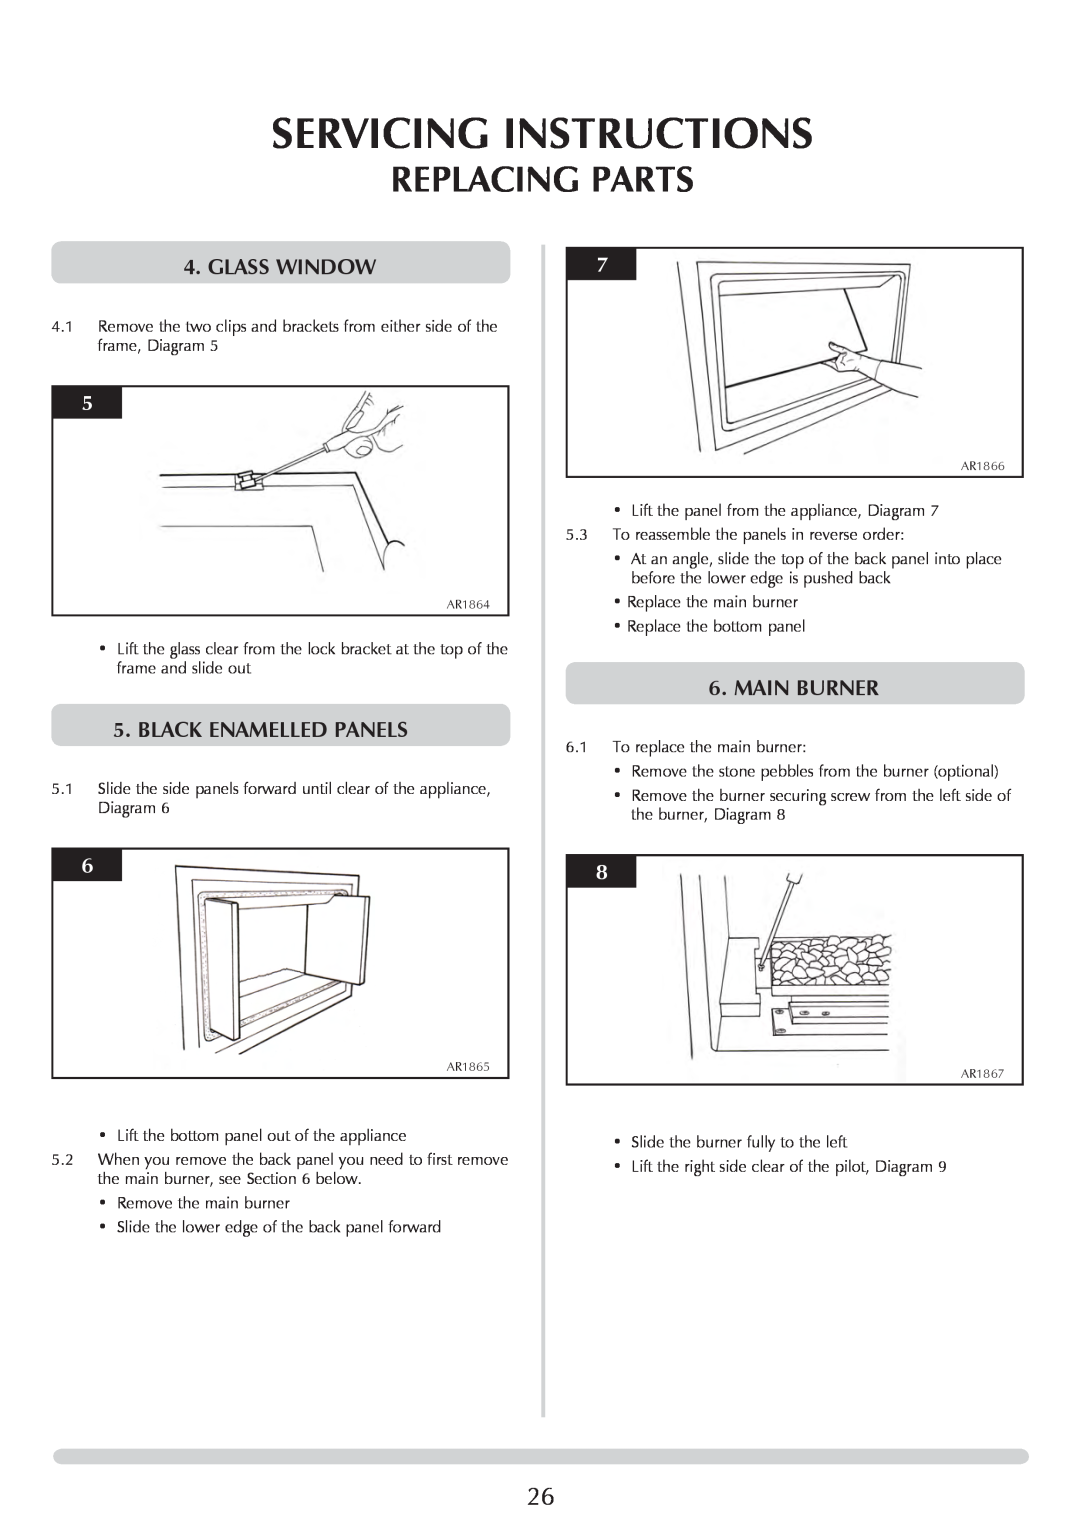 Stovax PR0919 manual Glass Window, Black Enamelled Panels, maIN BURNER, Servicing Instructions, Replacing Parts 